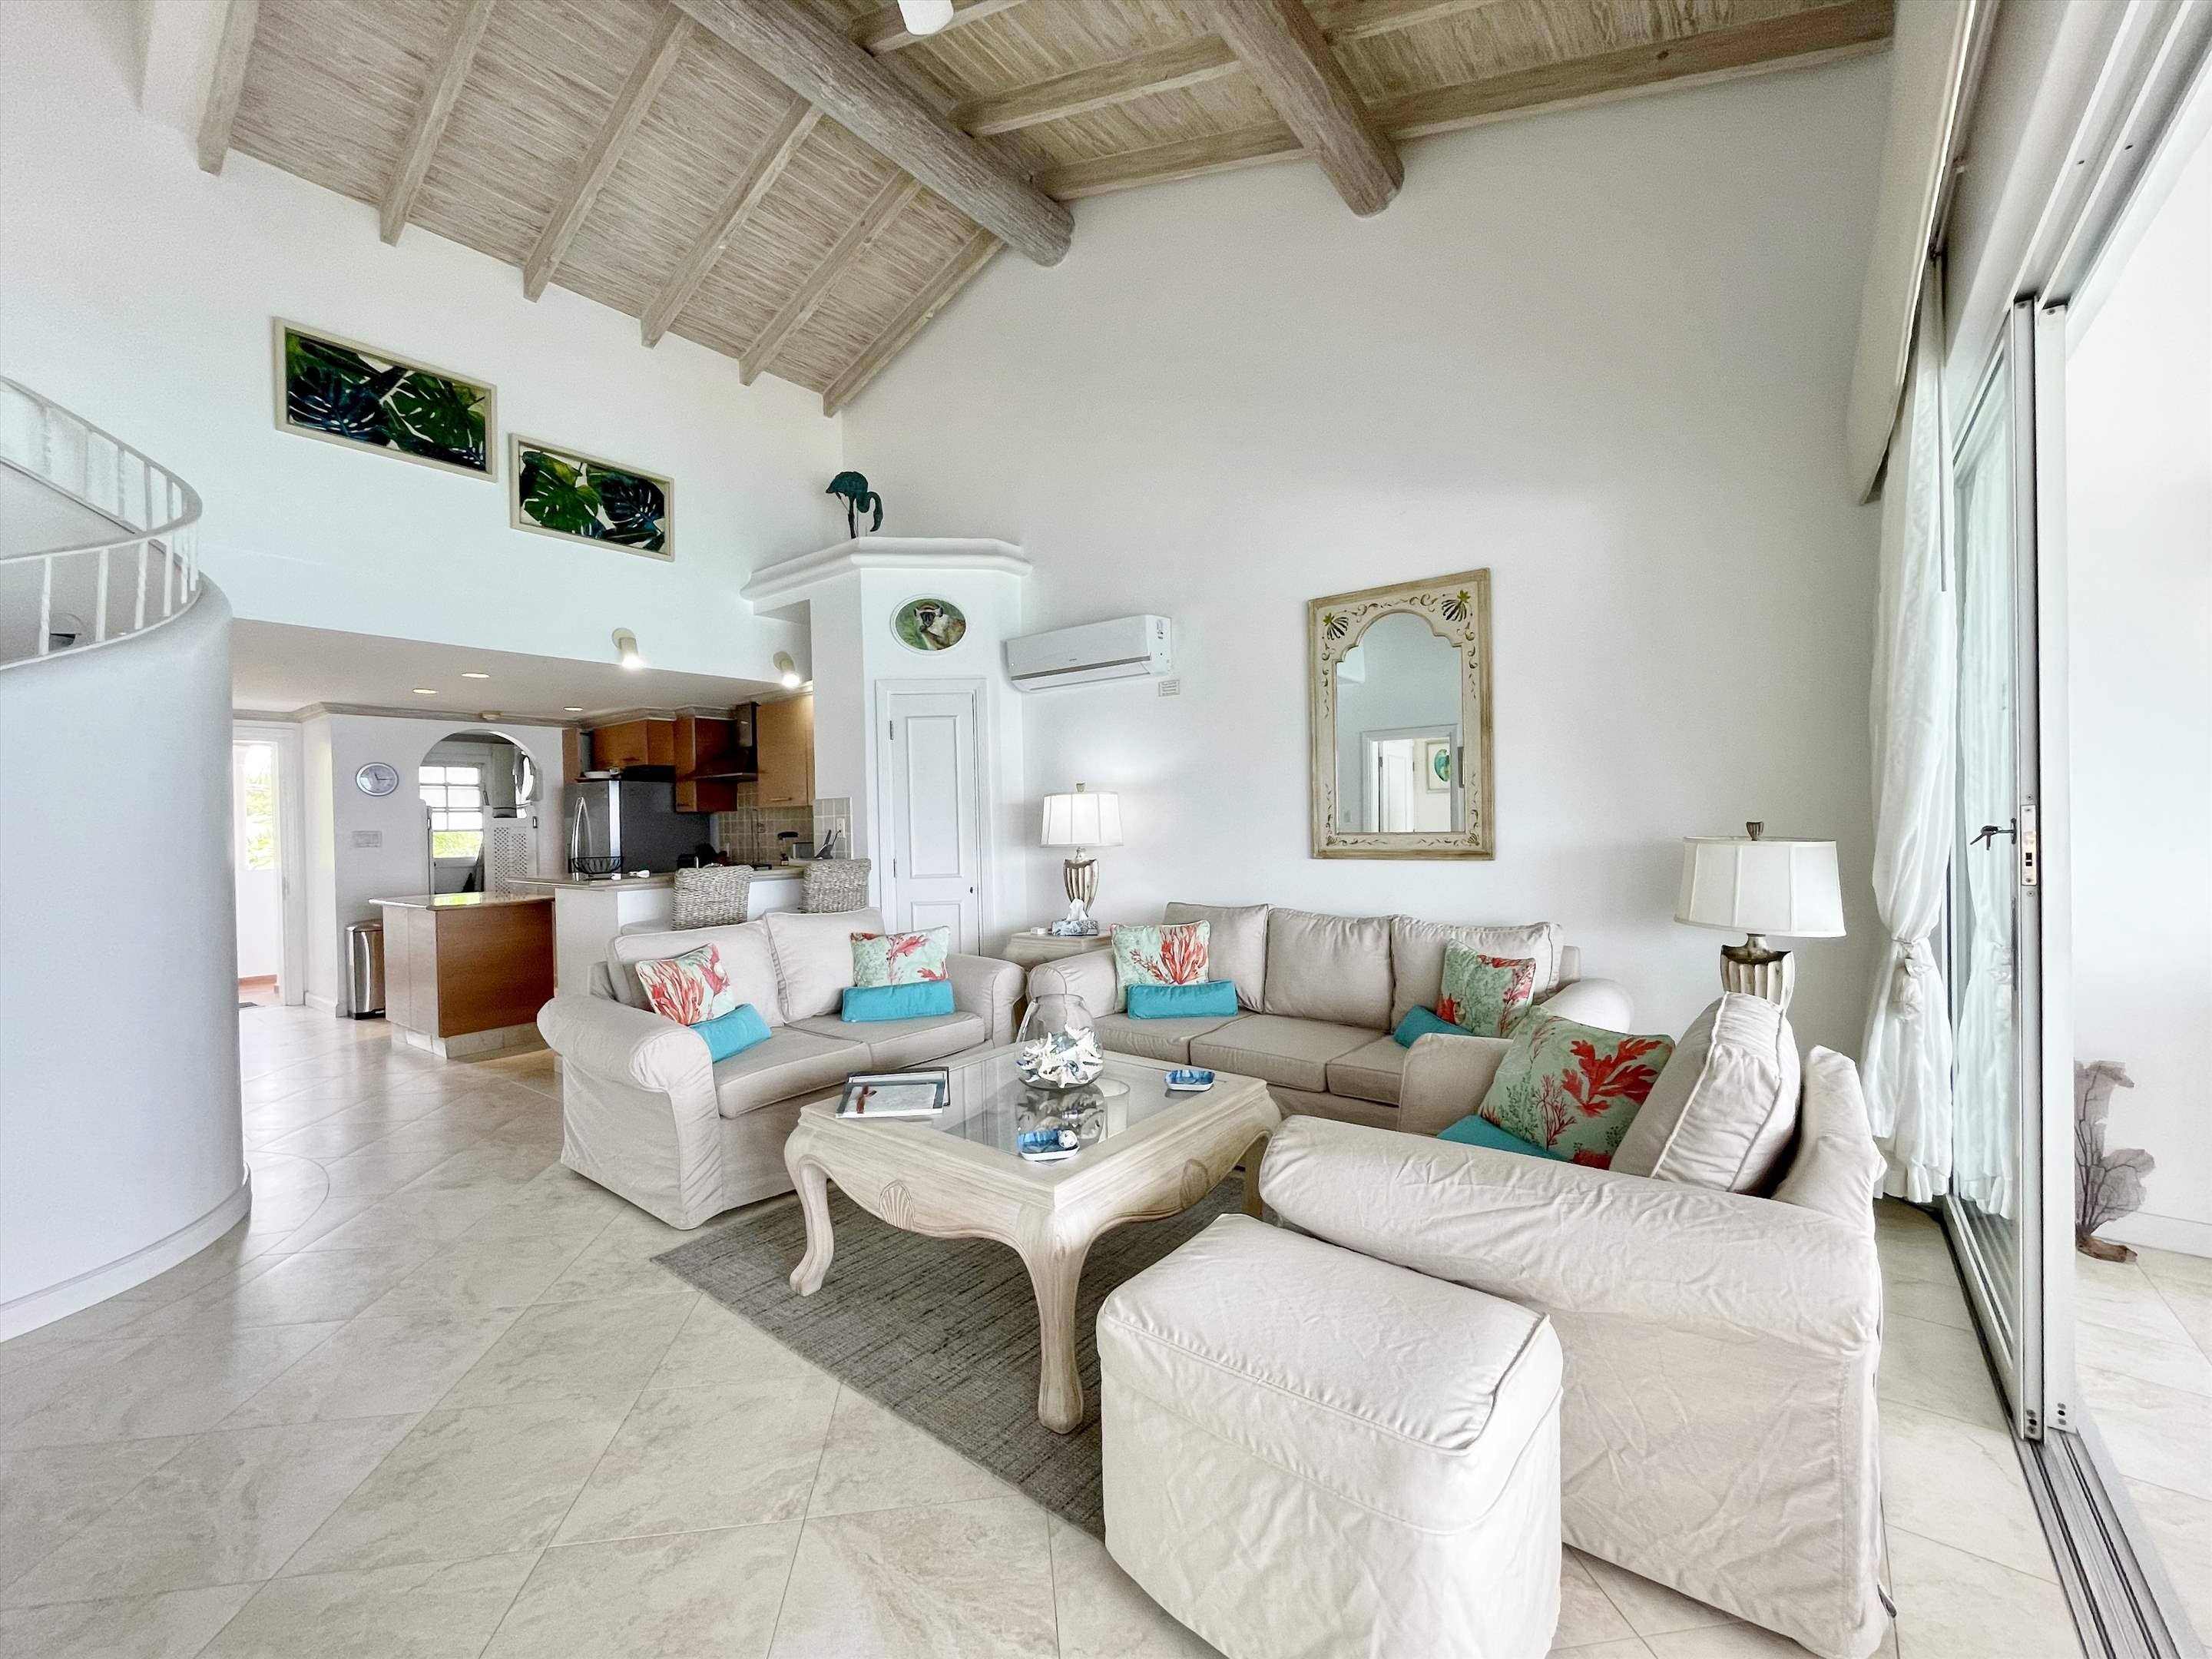 Villas on the Beach 403, 2 bedroom, 2 bedroom apartment in St. James & West Coast, Barbados Photo #4